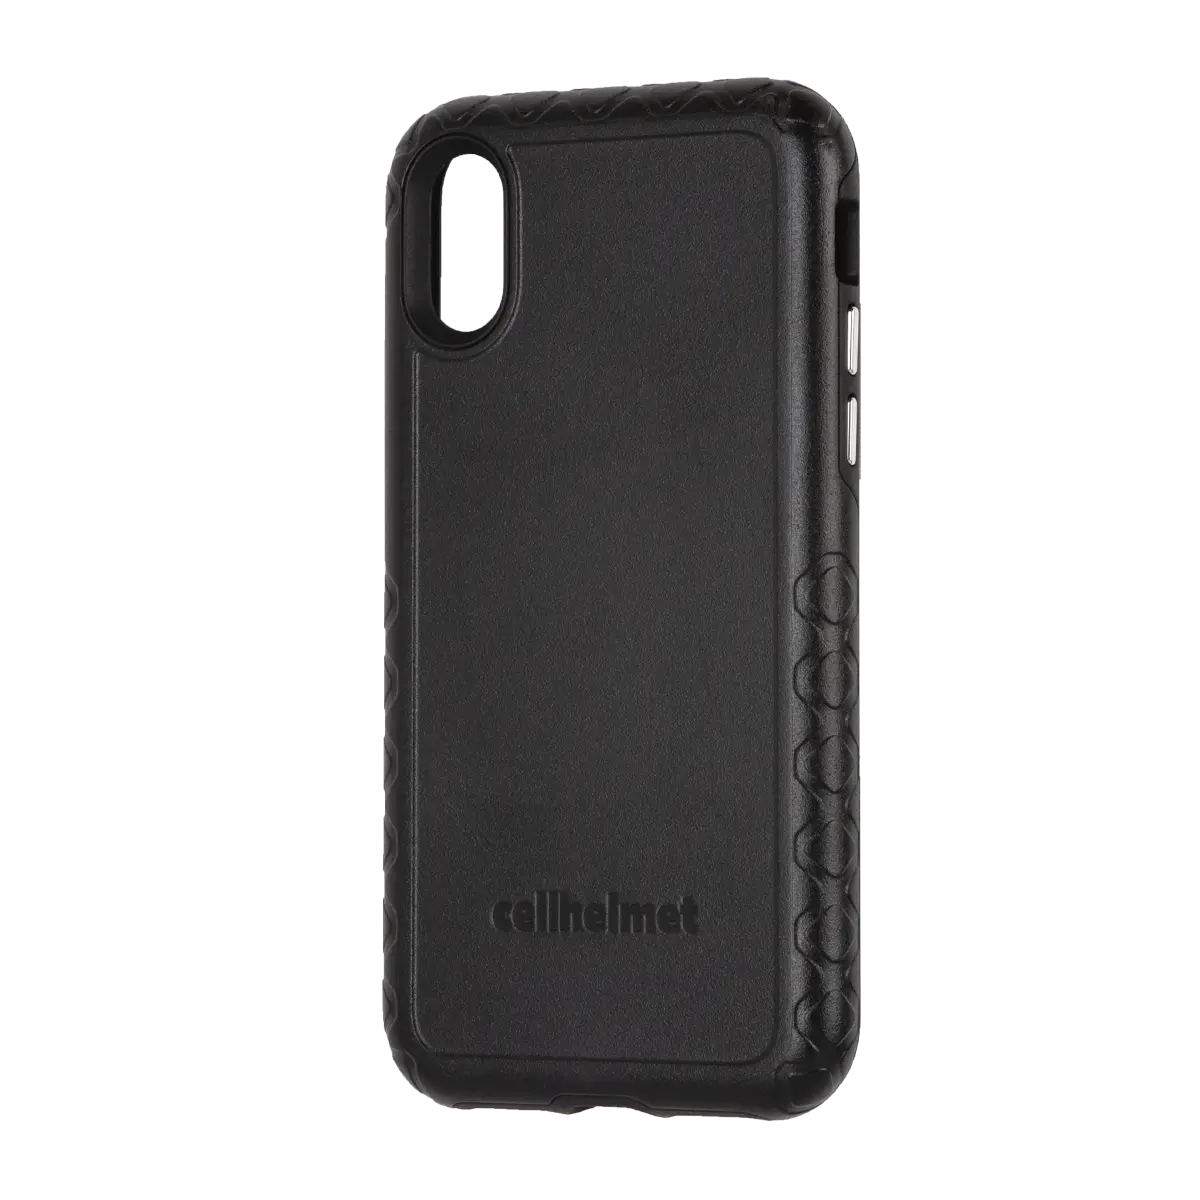 cellhelmet Black Custom Case for iPhone XS